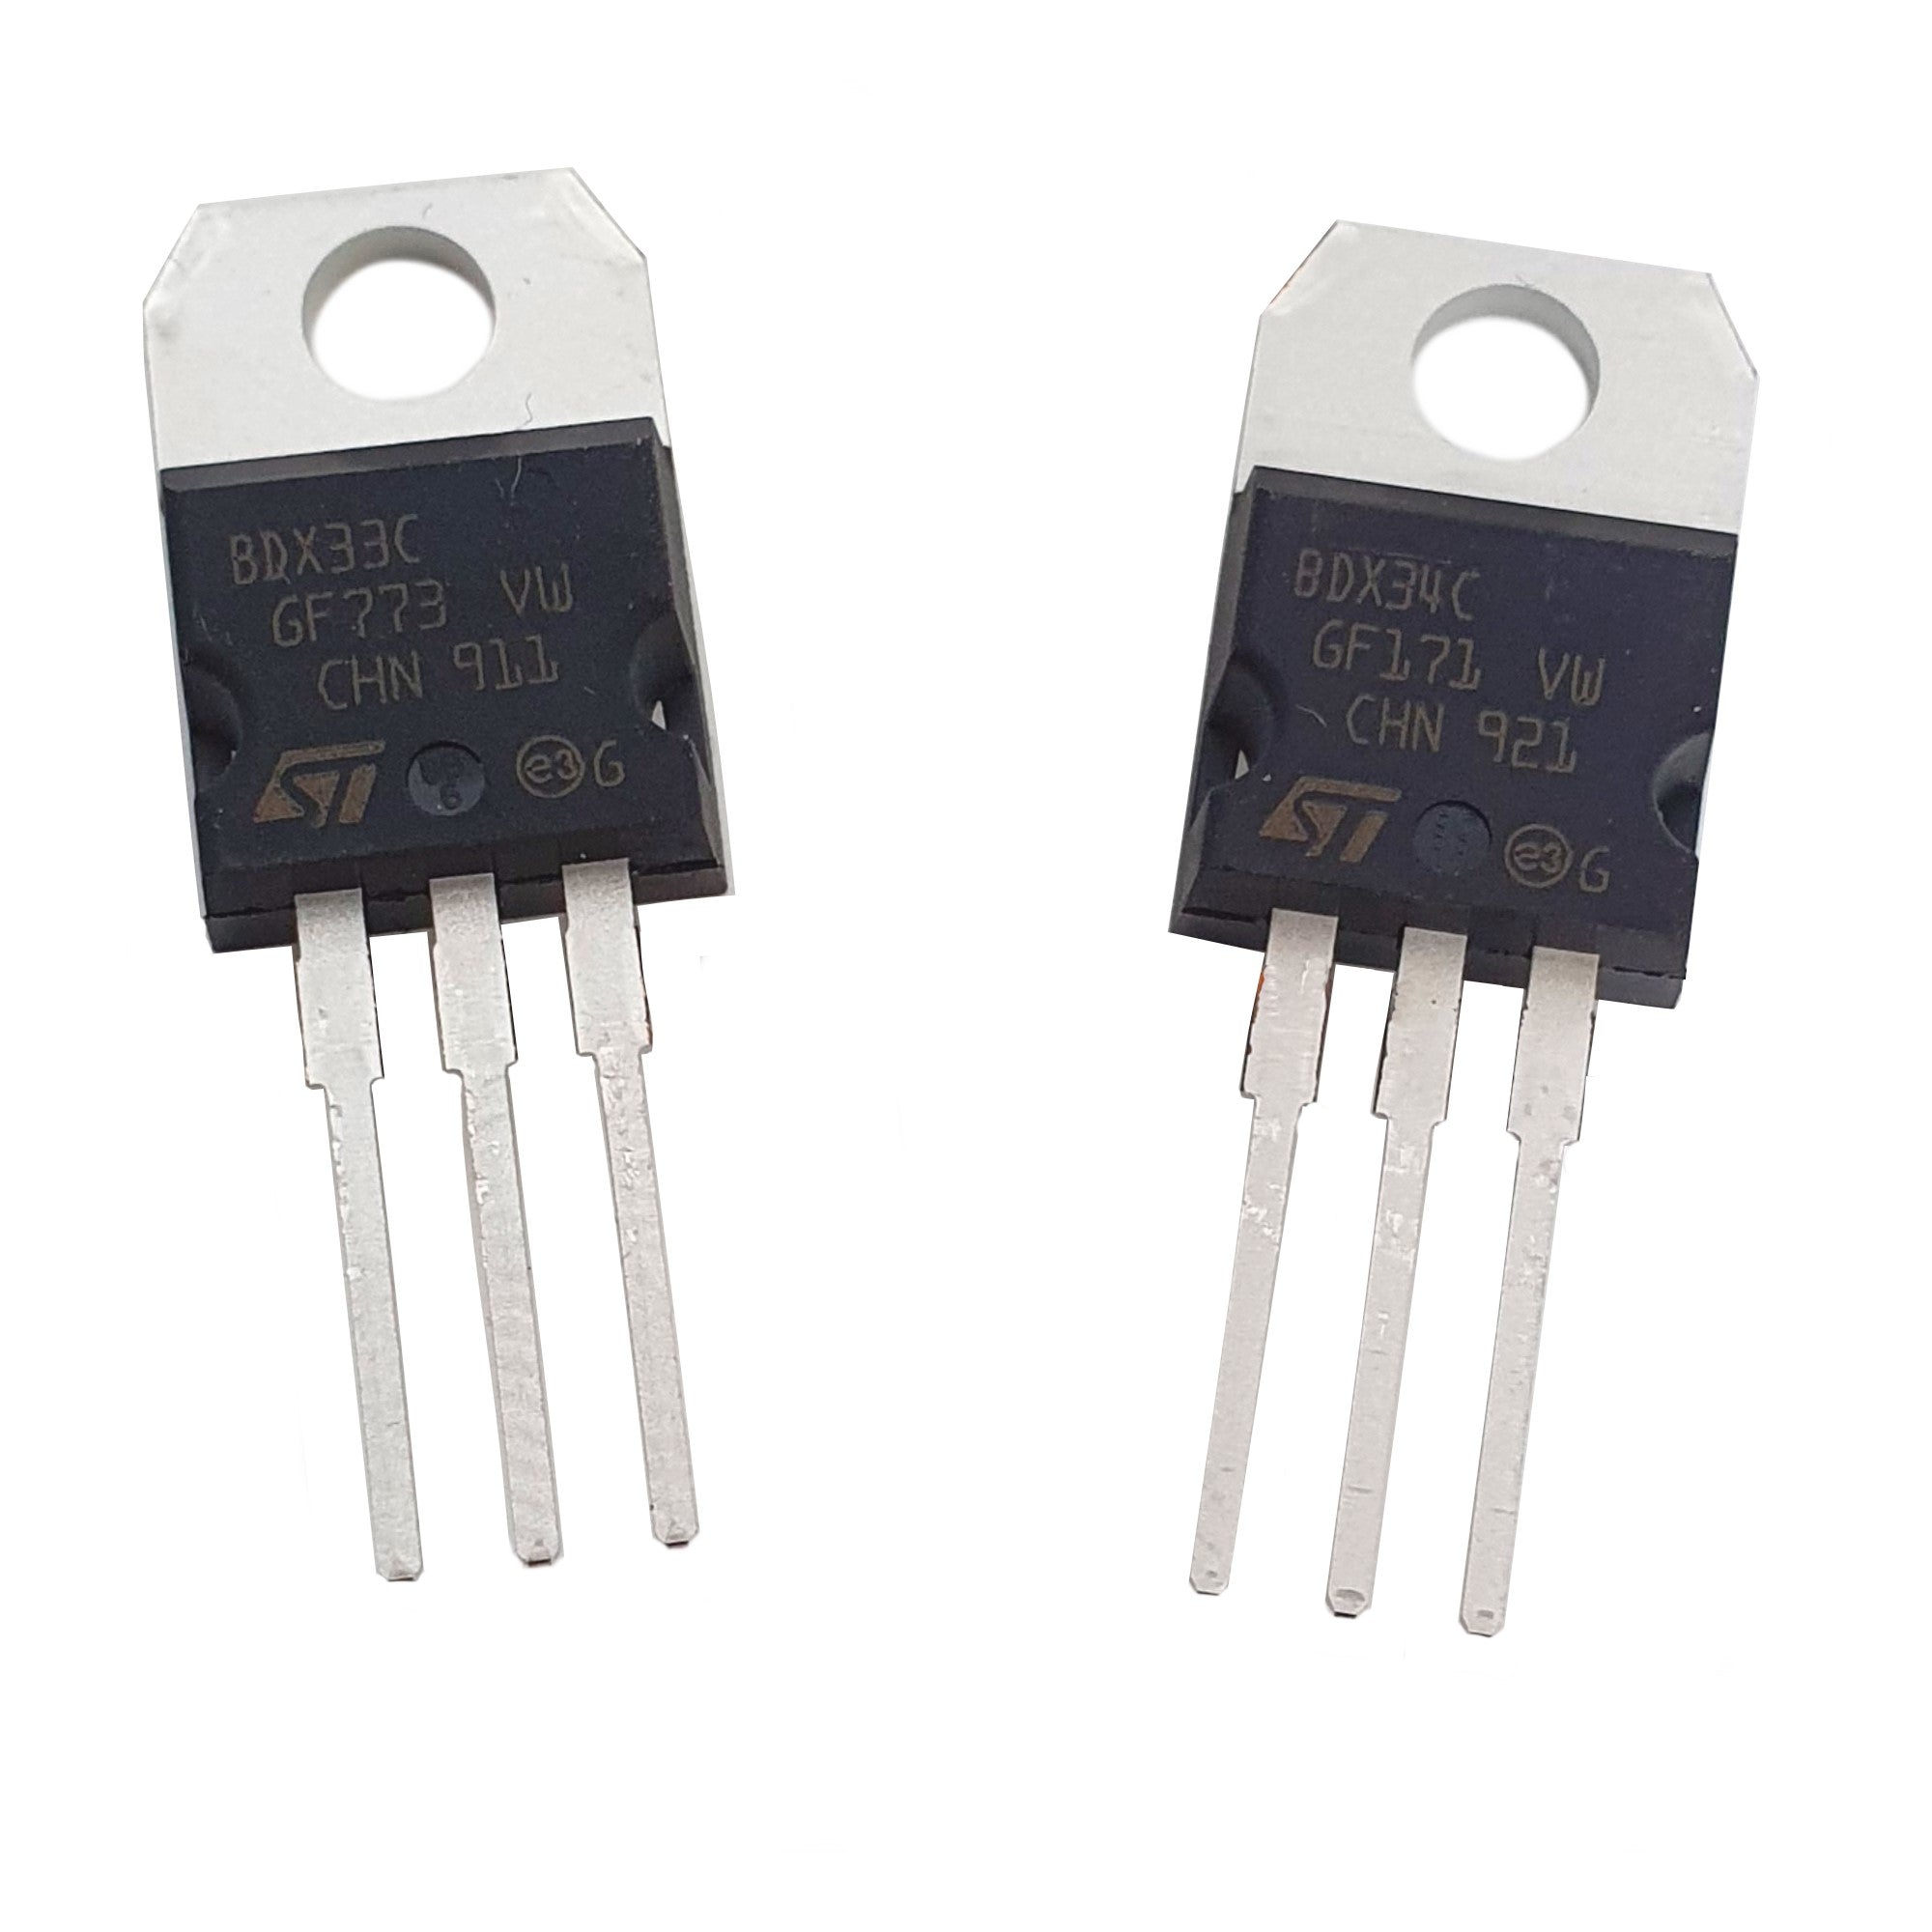 BDX33C & BDX34C 10A Darlington NPN Transistor Complementary Pair of NPN & PNP